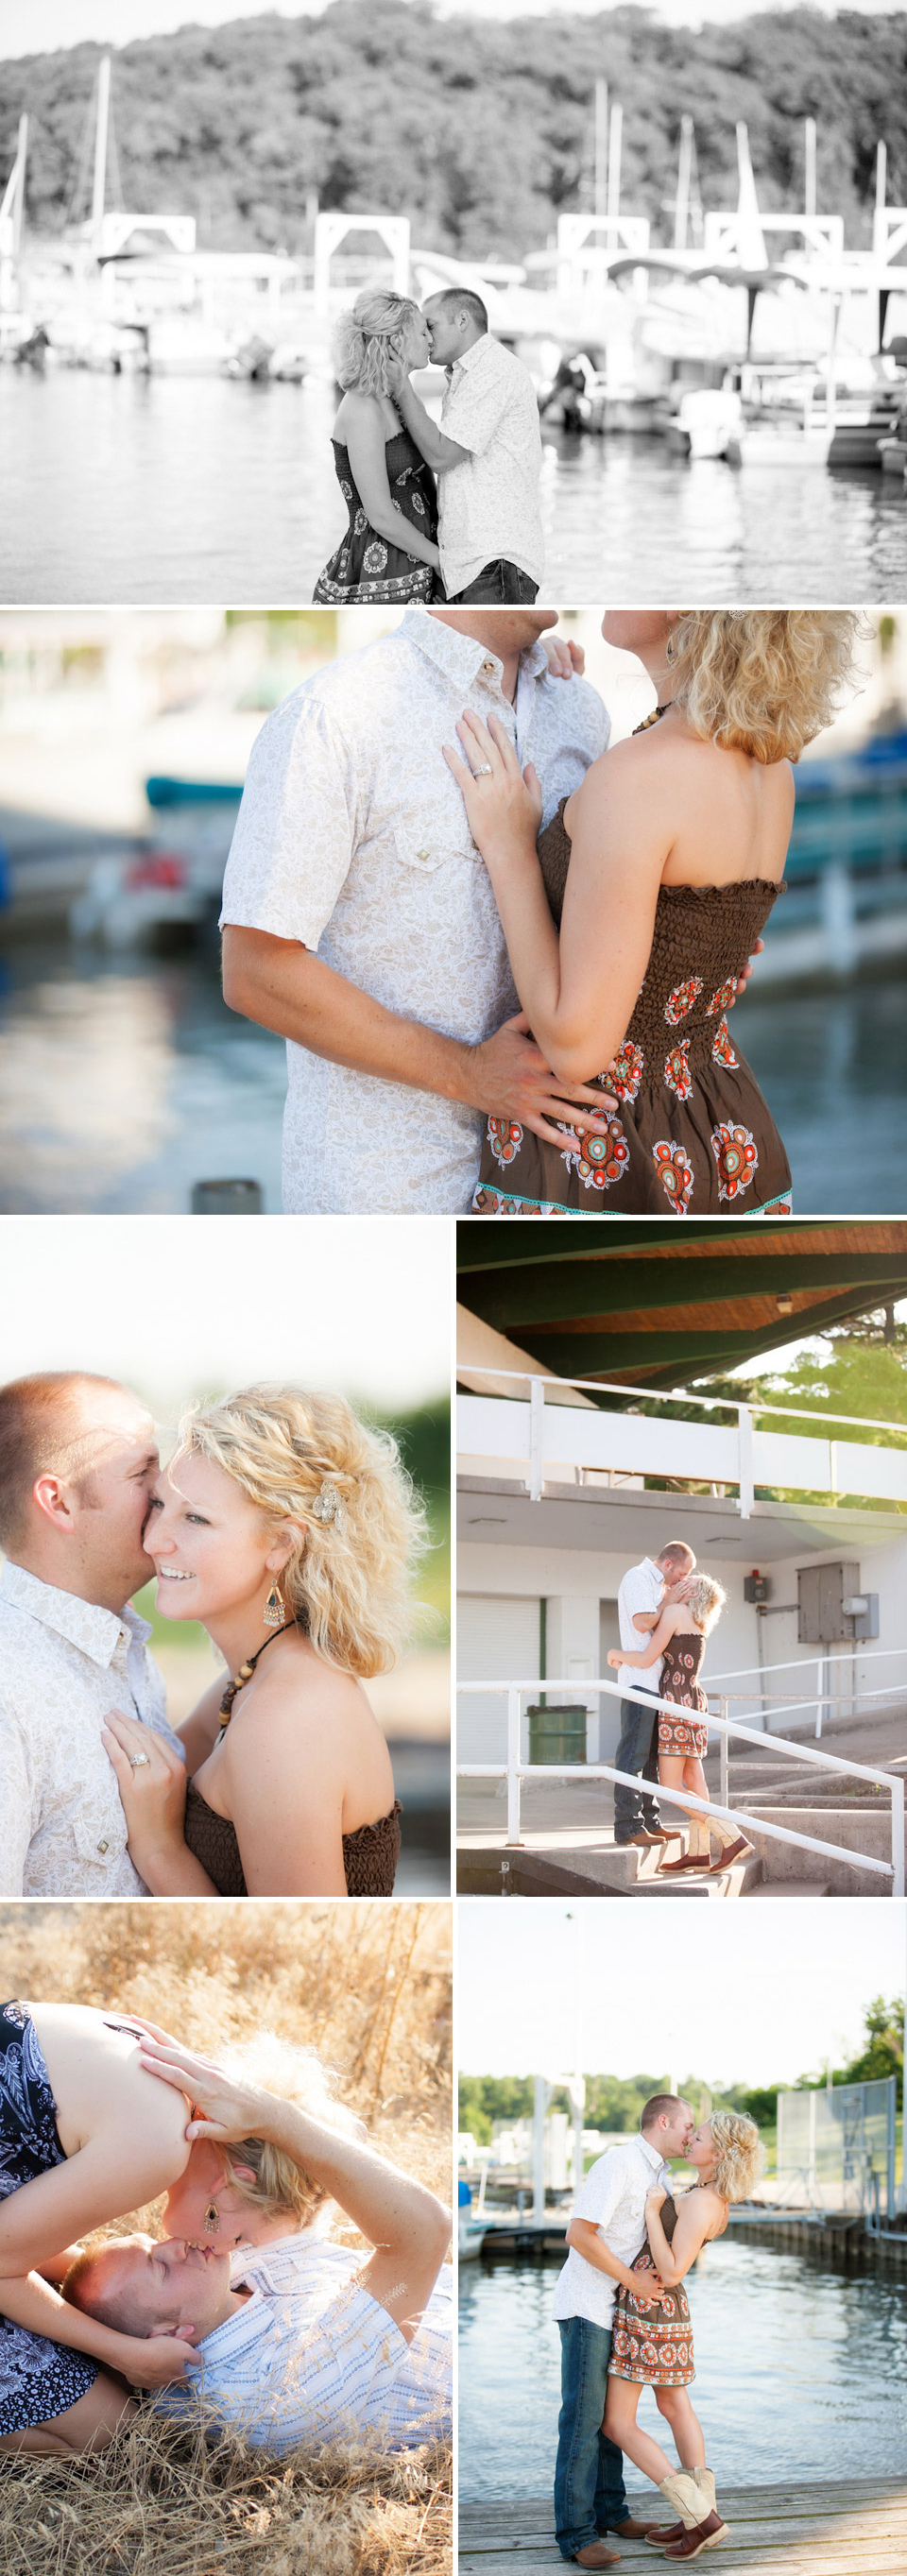 patrolmen, Lake Jacomo, Boats, sunset, couples, wedding photographers, Jana Marie Photography